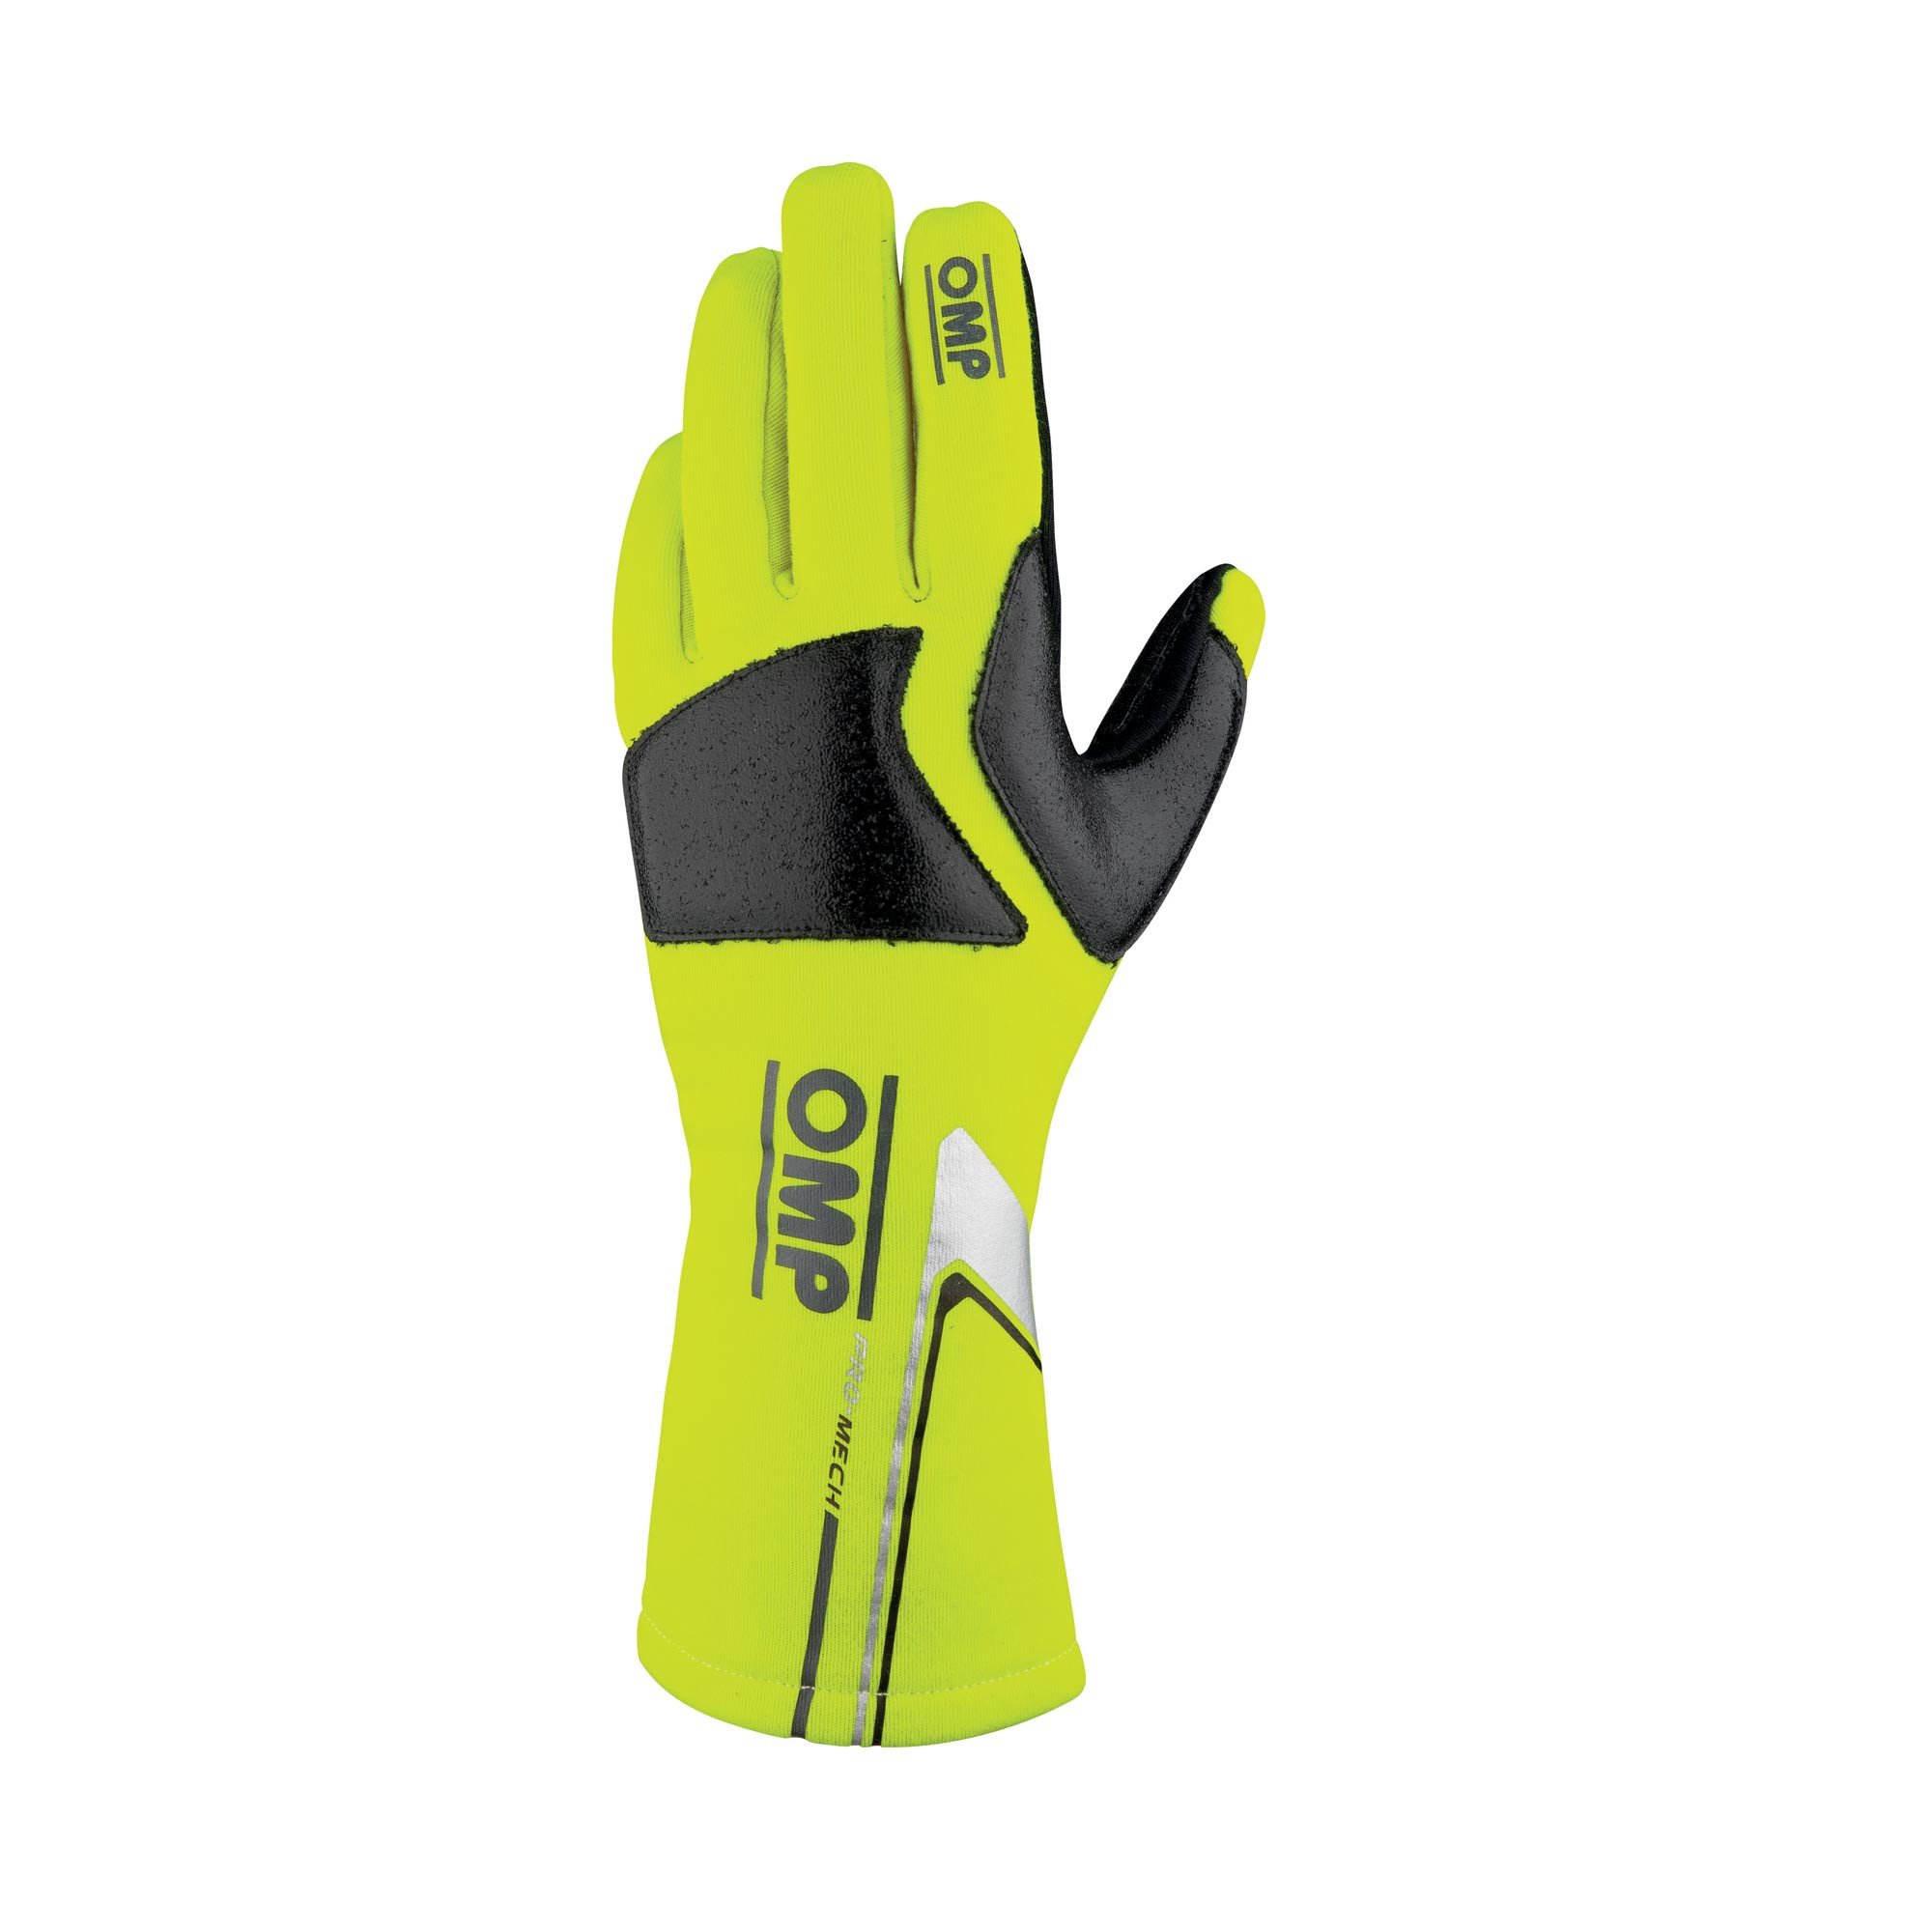 PRO Mech-S Gloves